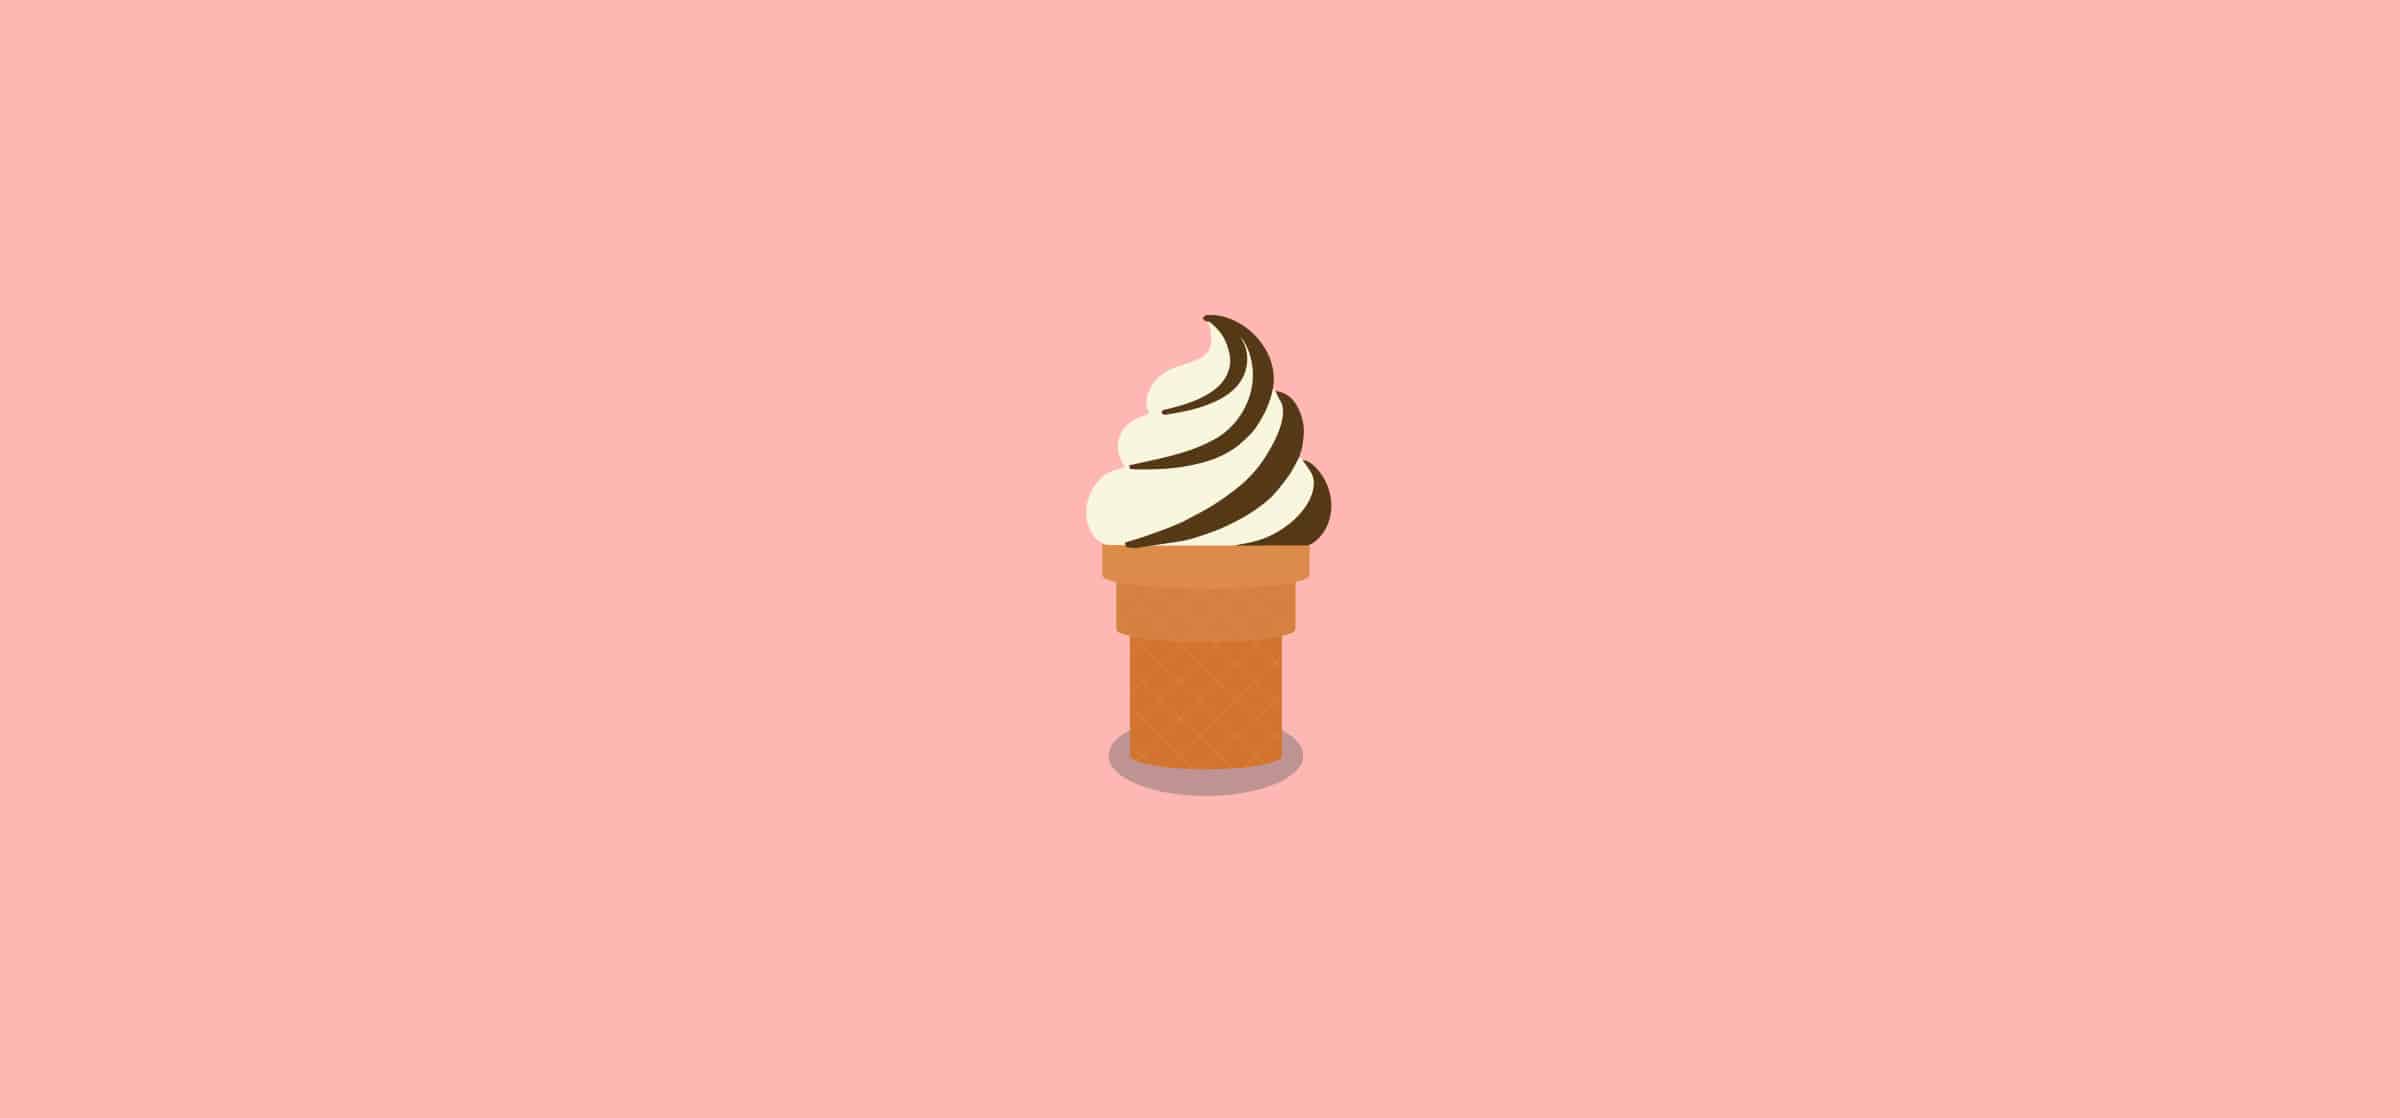 Swirls of vanilla and chocolate ice cream in a cone, representing application integration